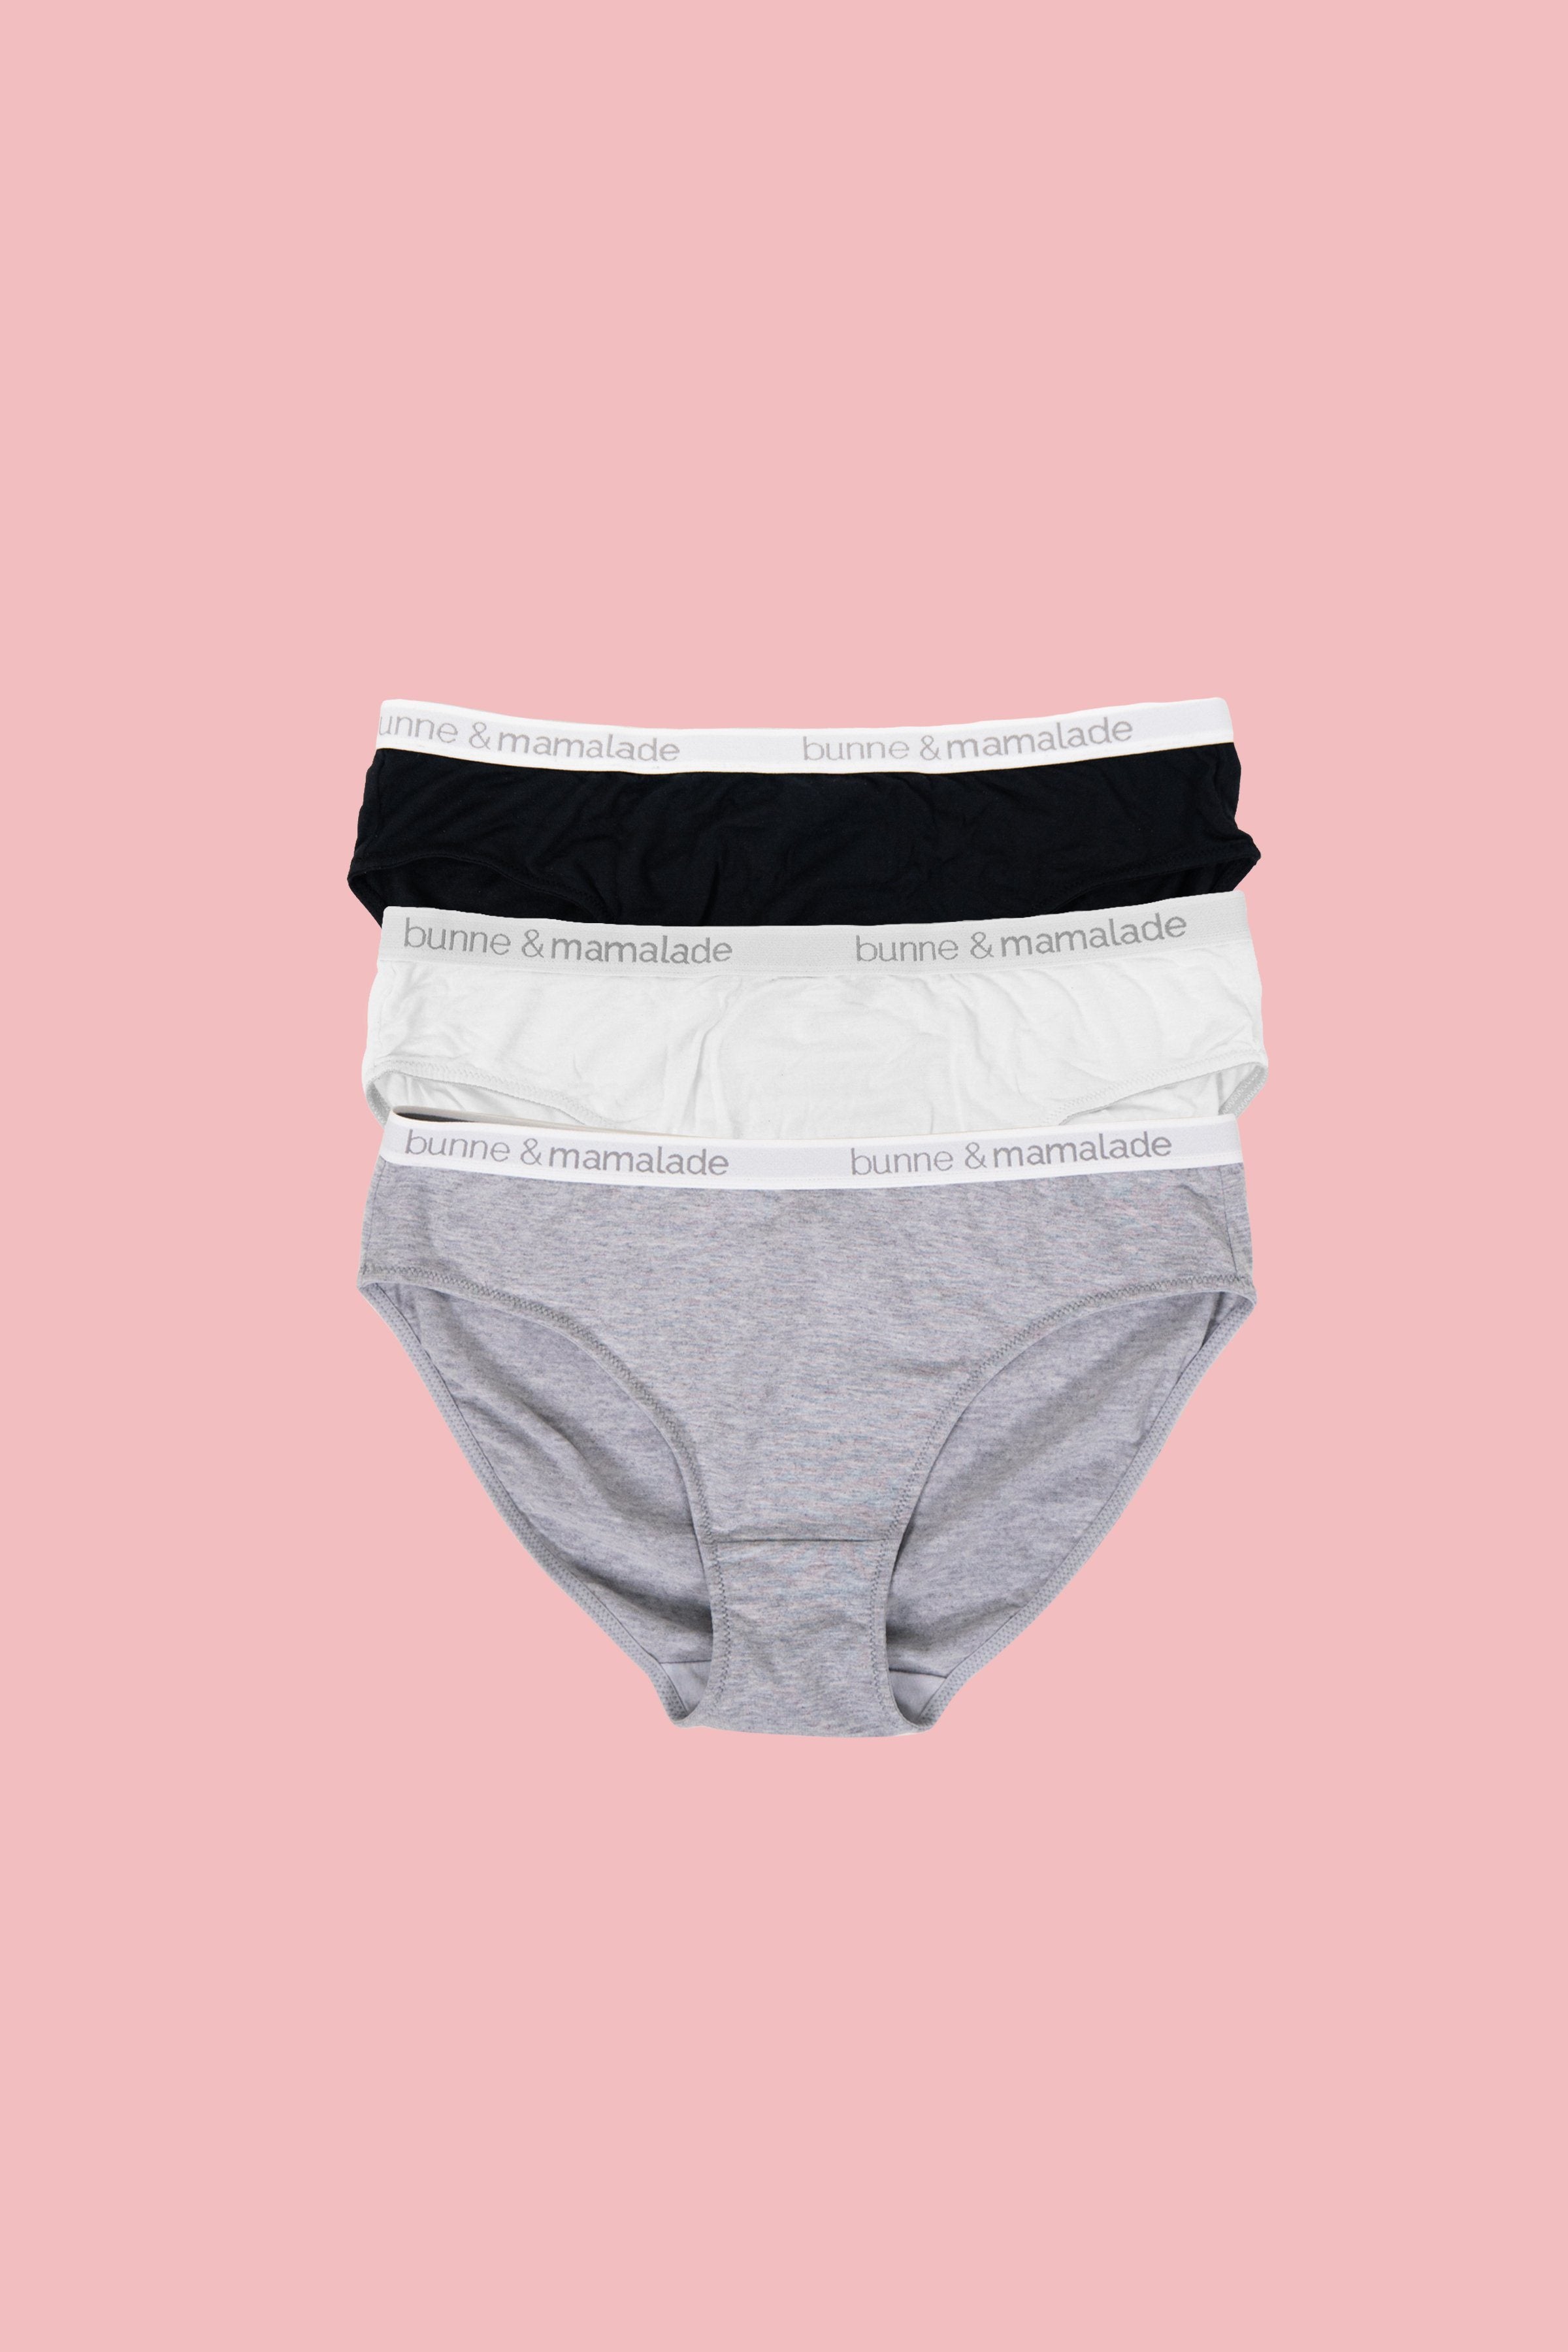 New Collection 2020 - Matching Underwear